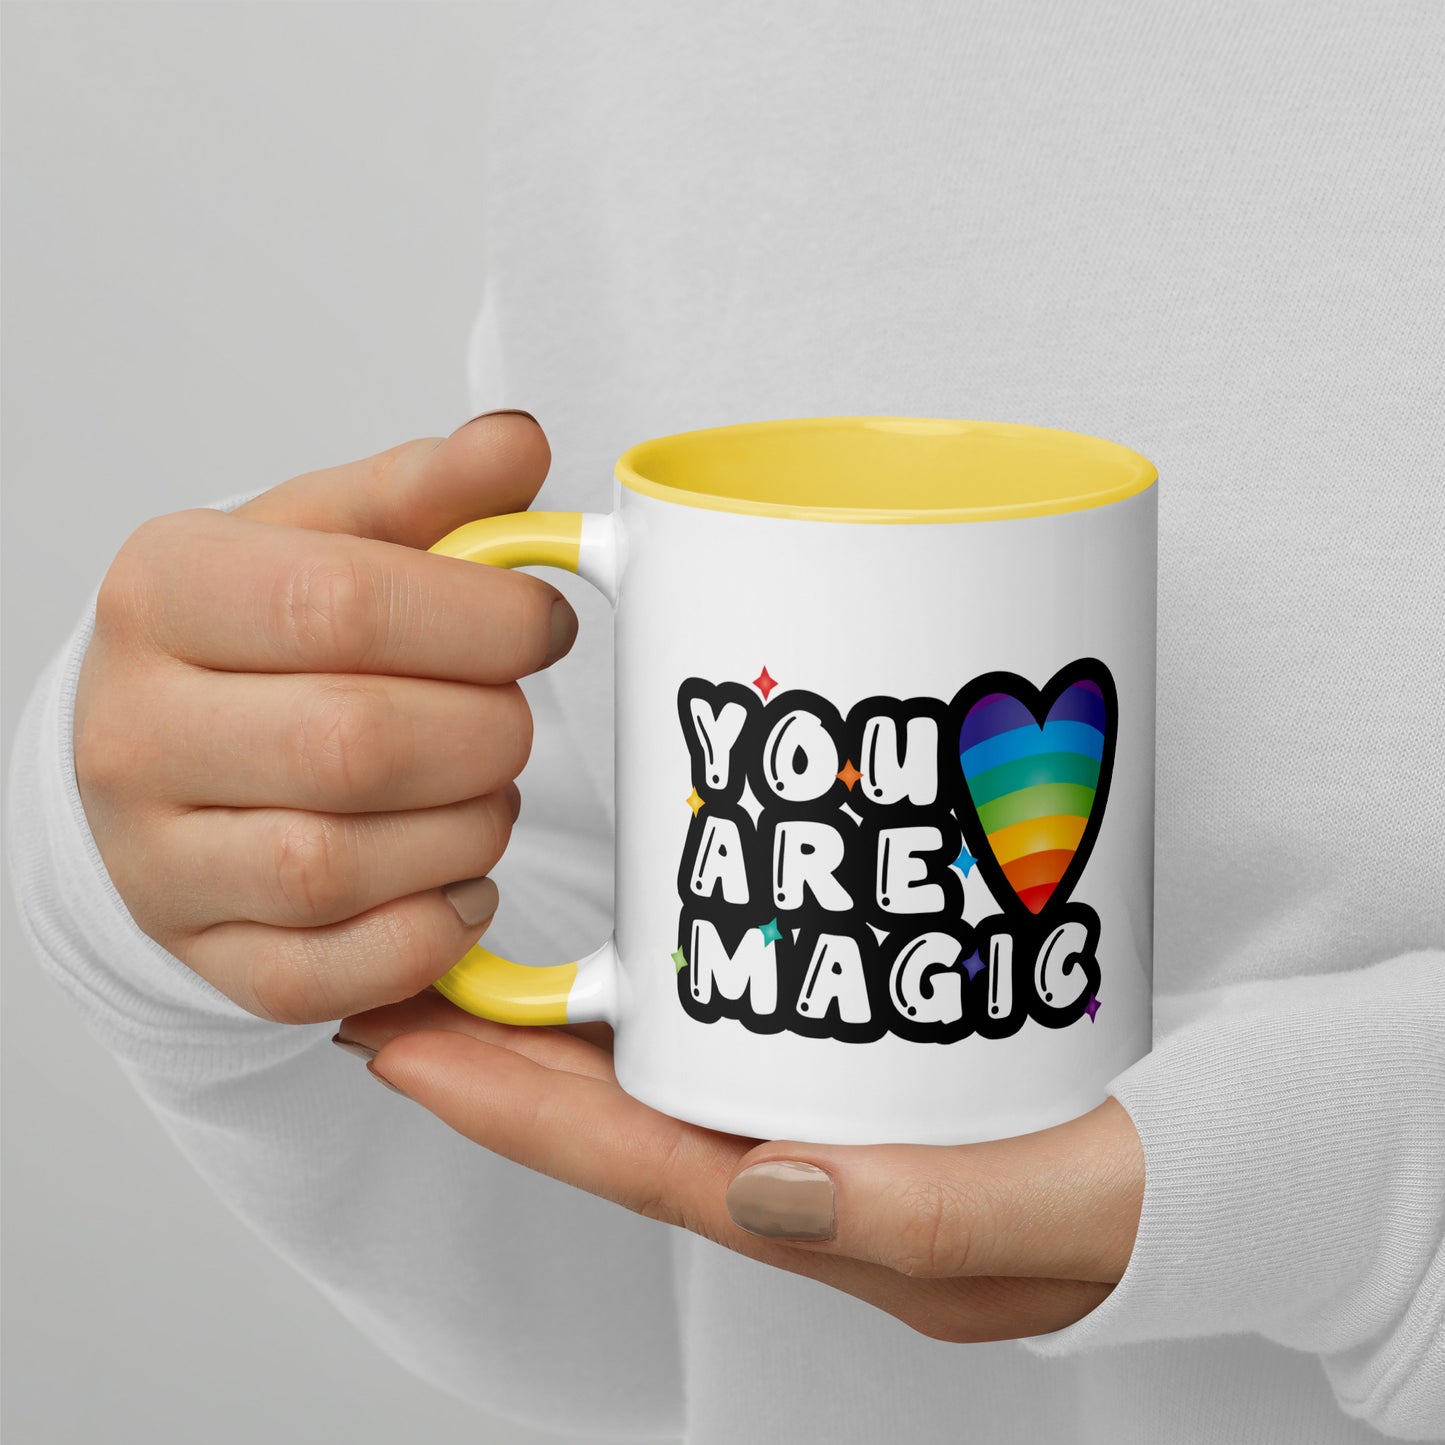 You Are Magic Mug with Color Inside